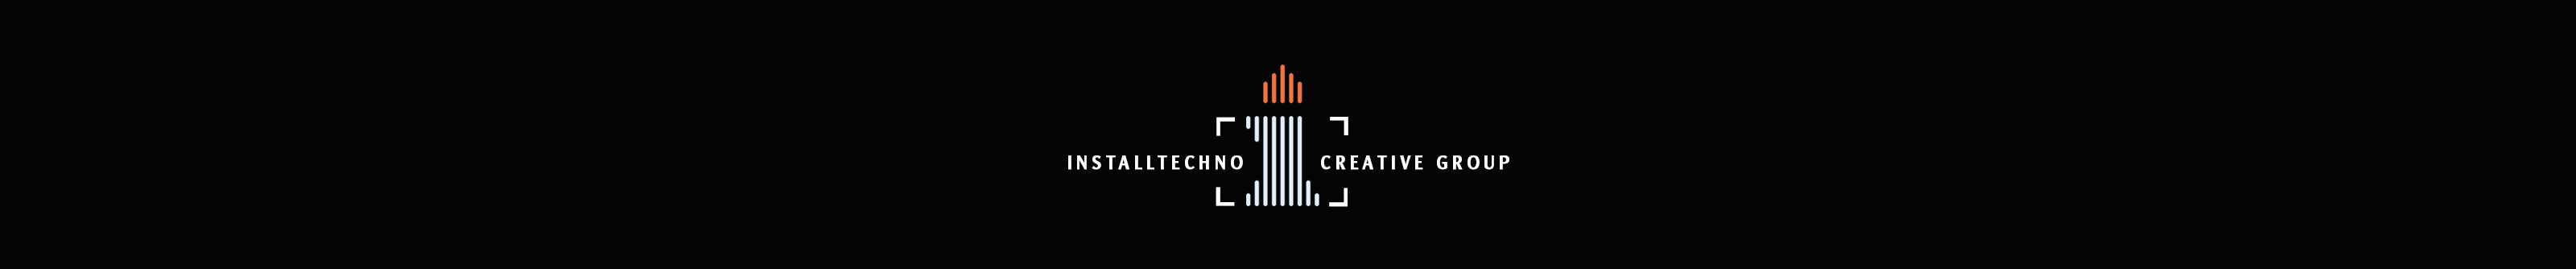 Баннер профиля Installtechno Creative Group